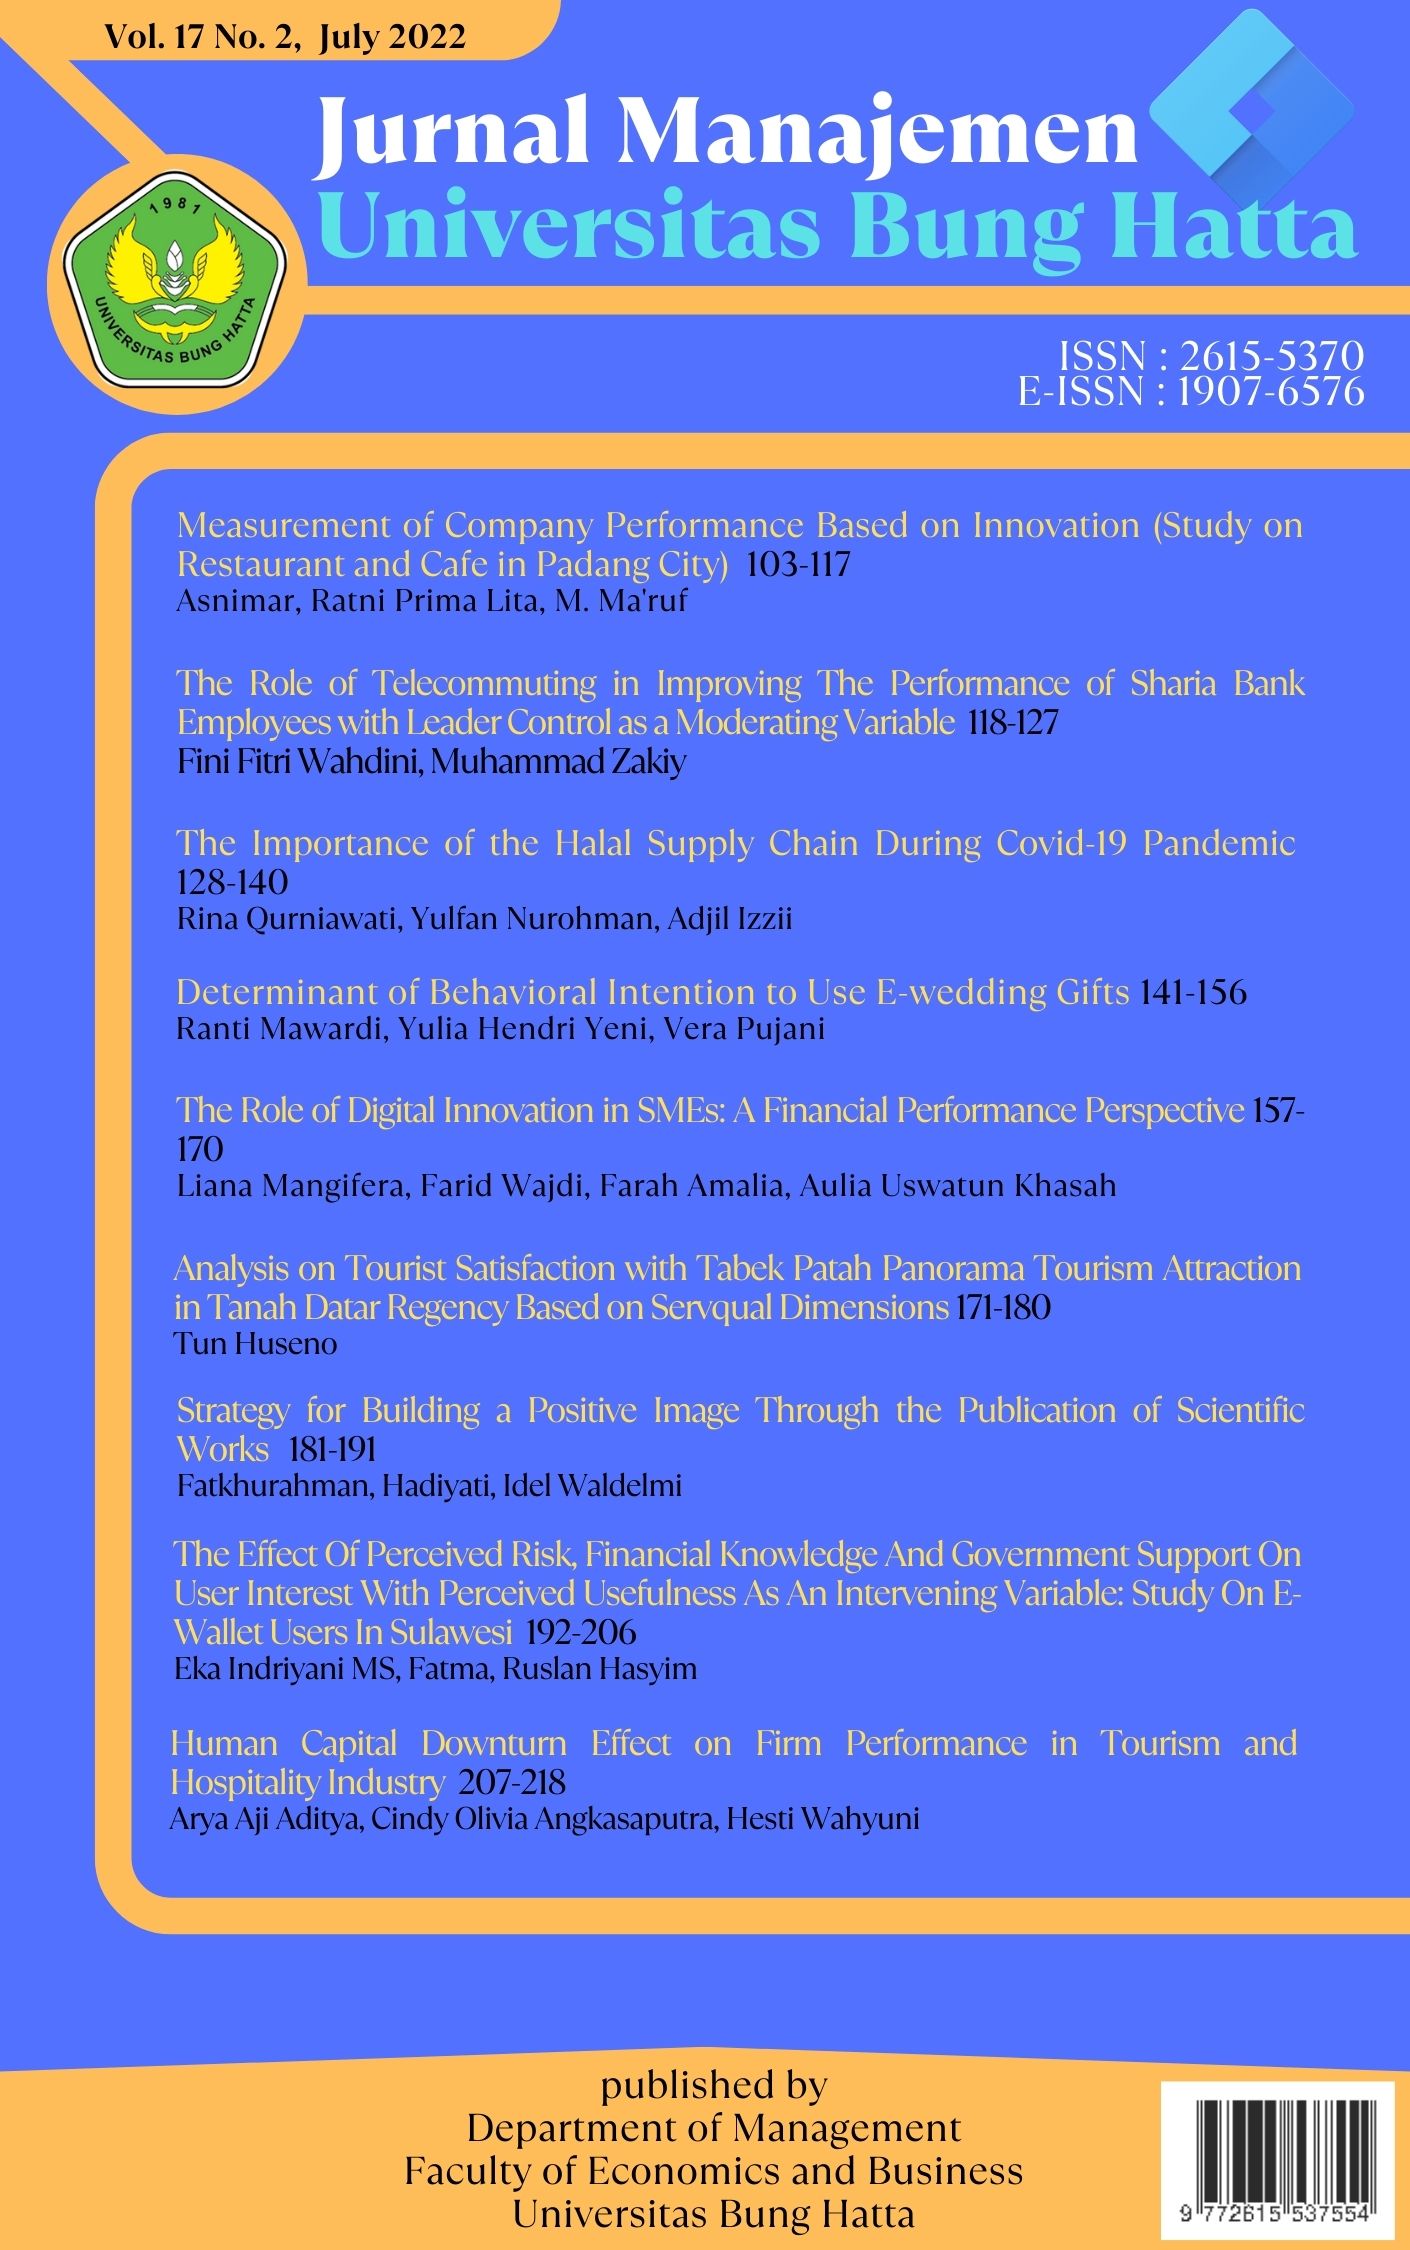 					View Vol. 17 No. 2 (2022): Jurnal Manajemen Universitas Bung Hatta
				